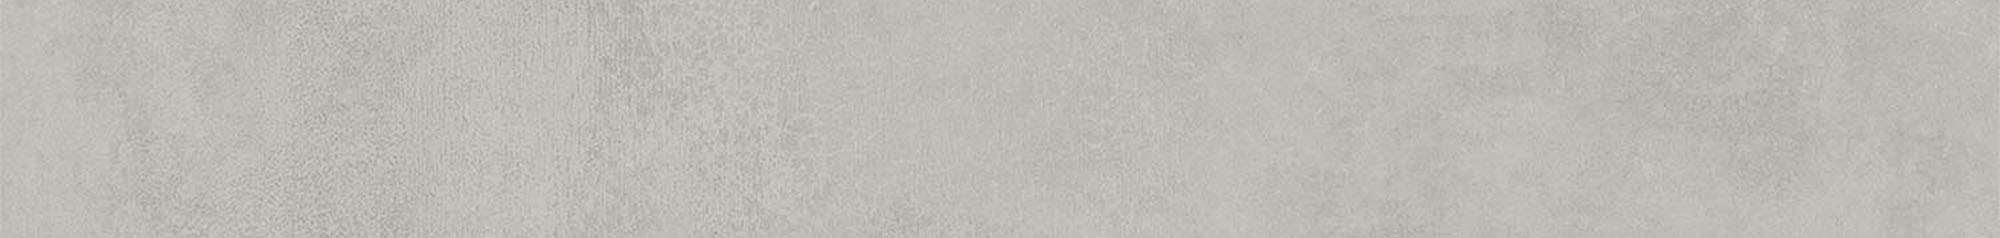 DD841190R/8BT Плинтус Про Догана серый светлый матовый обрезной 80x9,5x0,9 Kerama Marazzi